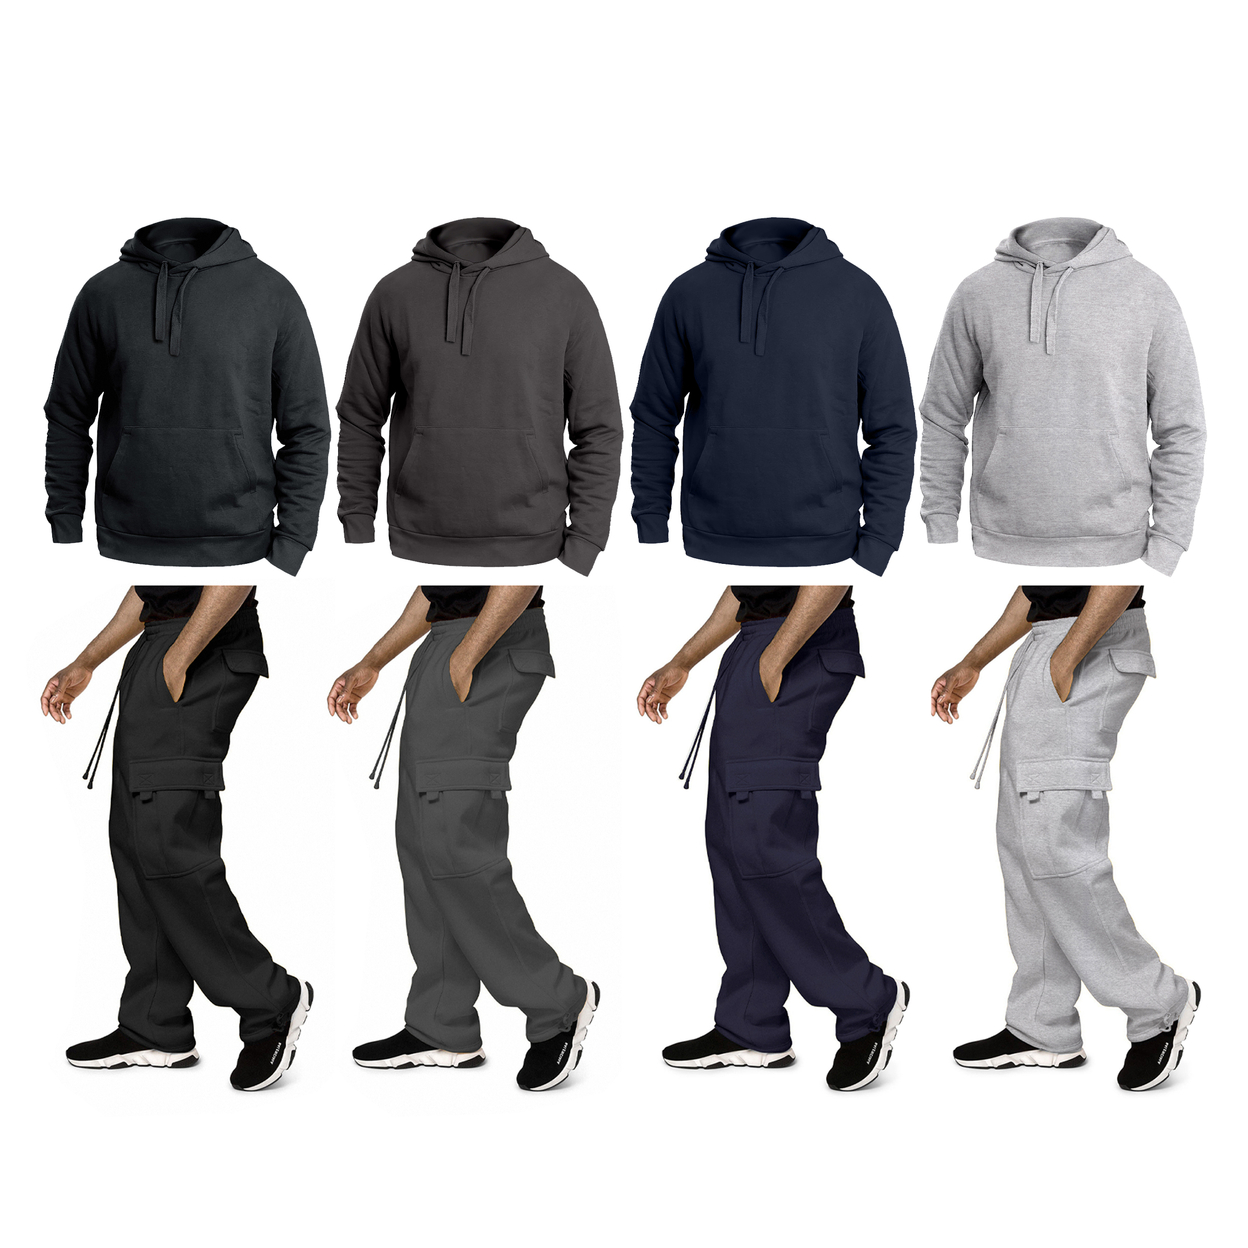 Multi-Pack: Big & Tall Men's Winter Warm Cozy Athletic Fleece Lined Multi-Pocket Cargo Sweatsuit - Charcoal, 1-pack, 3xl